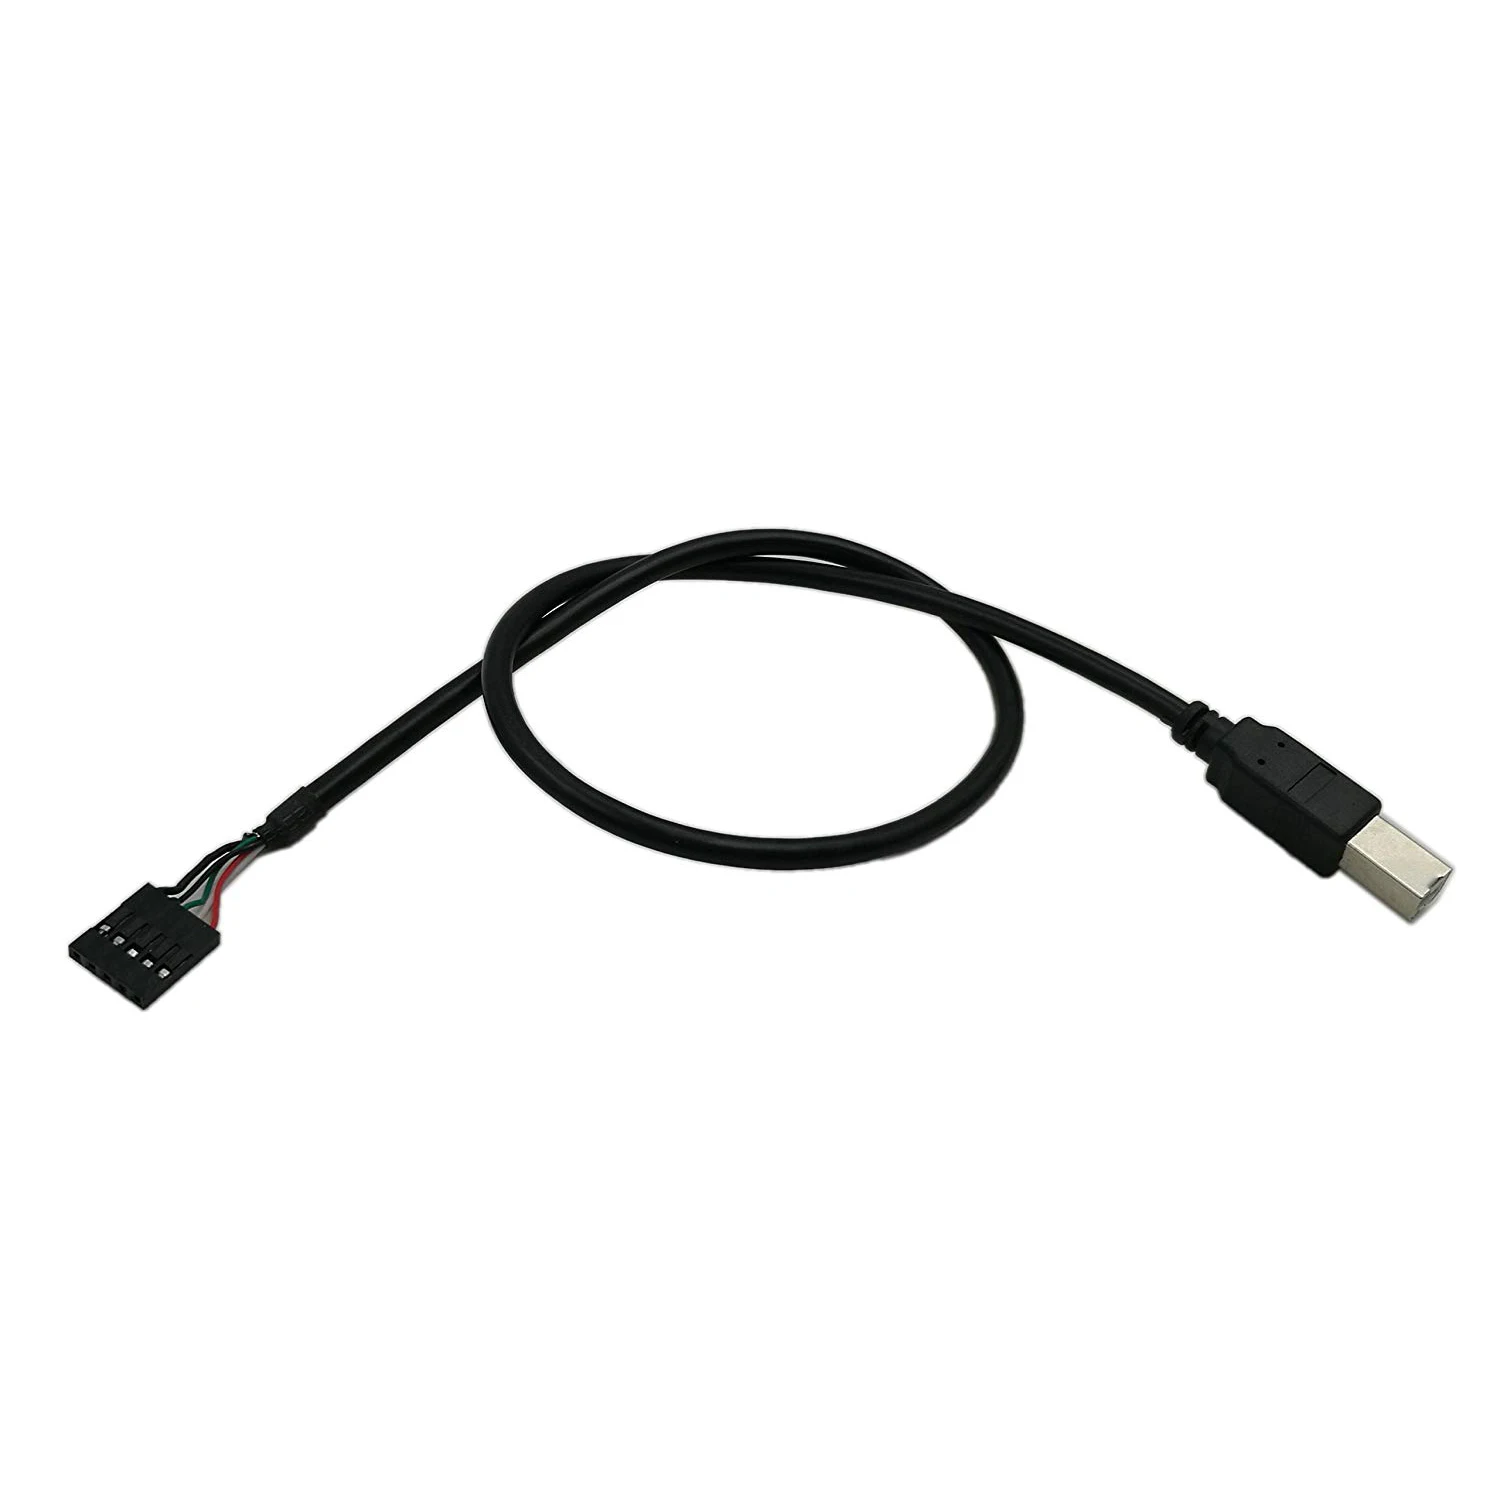 USB 2,0 Тип B штекер для Dupont 5 Pin клемма женского типа материнская плата кабель шнур (50 см)